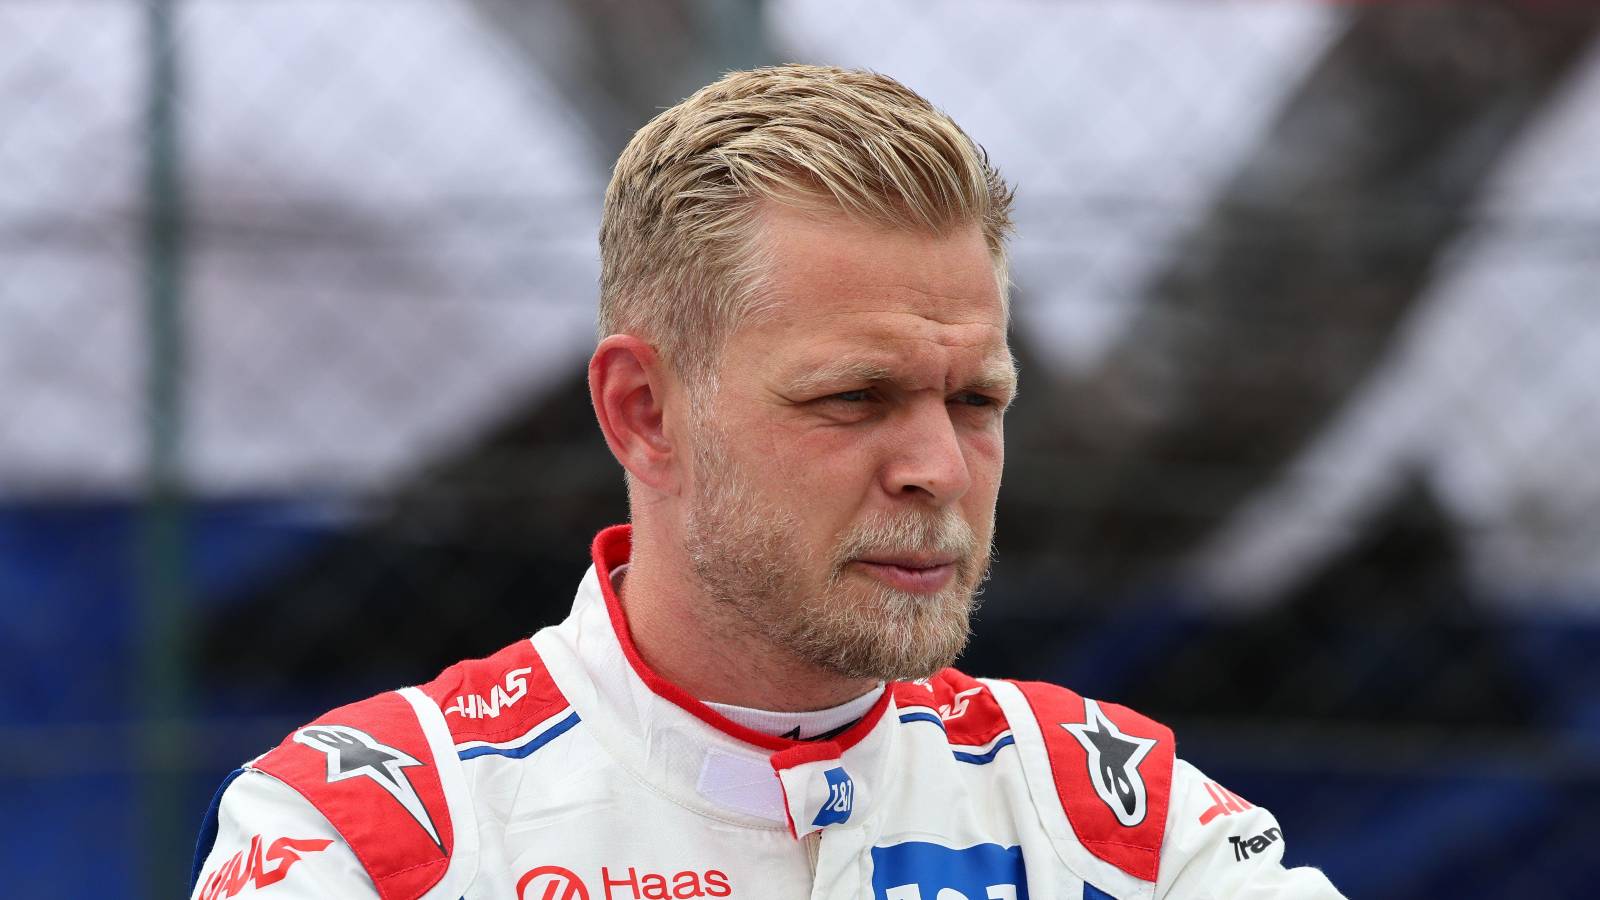 FIA Under Scrutiny After Magnussen Cleared in Miami GP